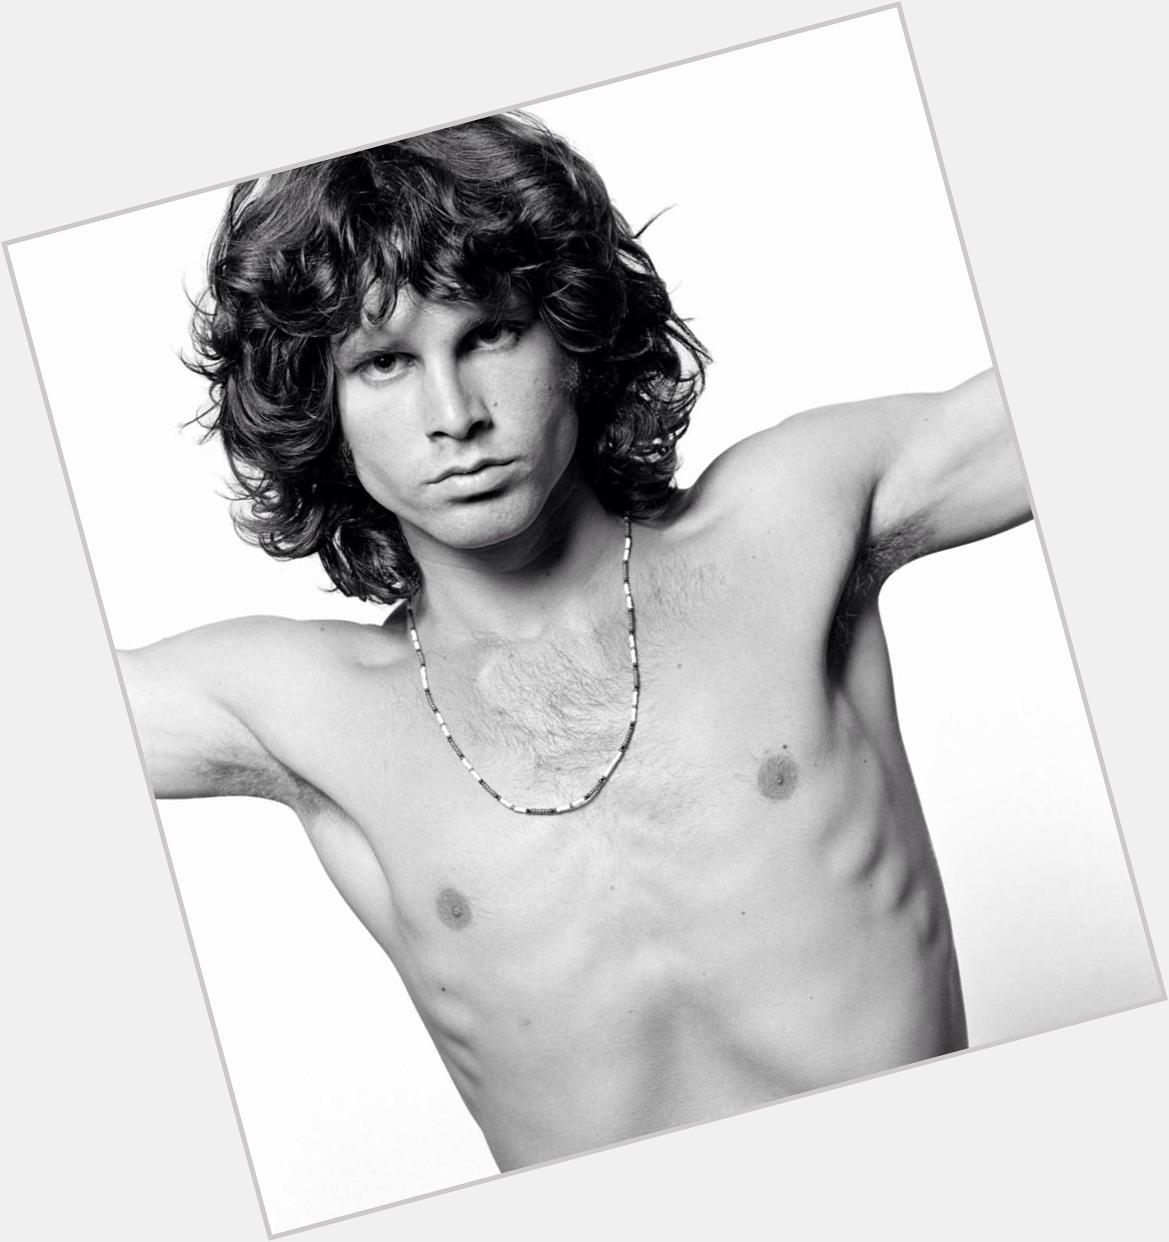 Happy birthday Jim Morrison RIP x 